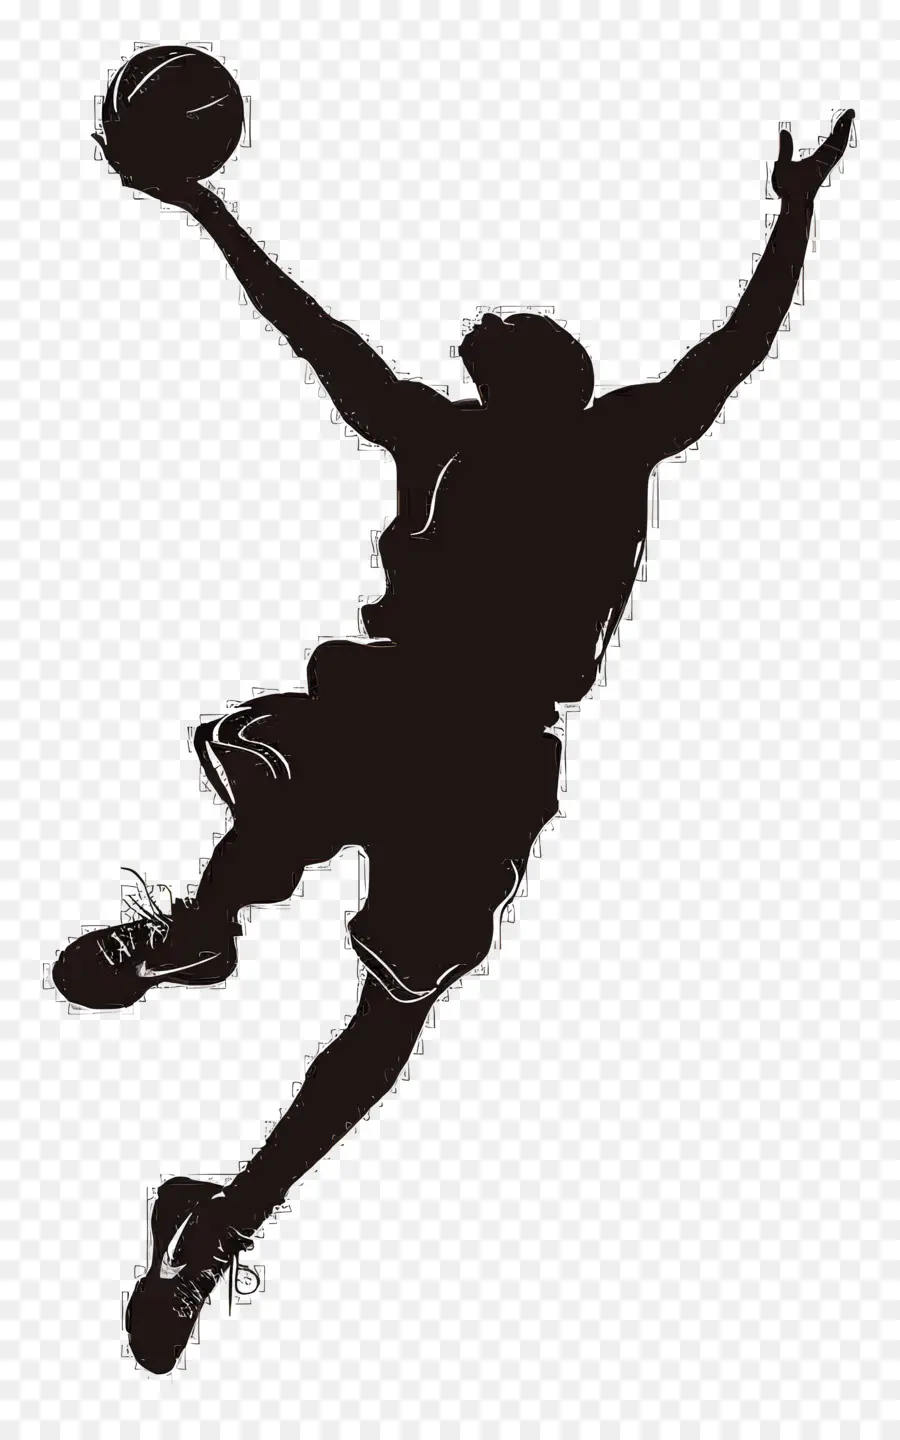 basketball silhouette silhouette person mid-air reaching